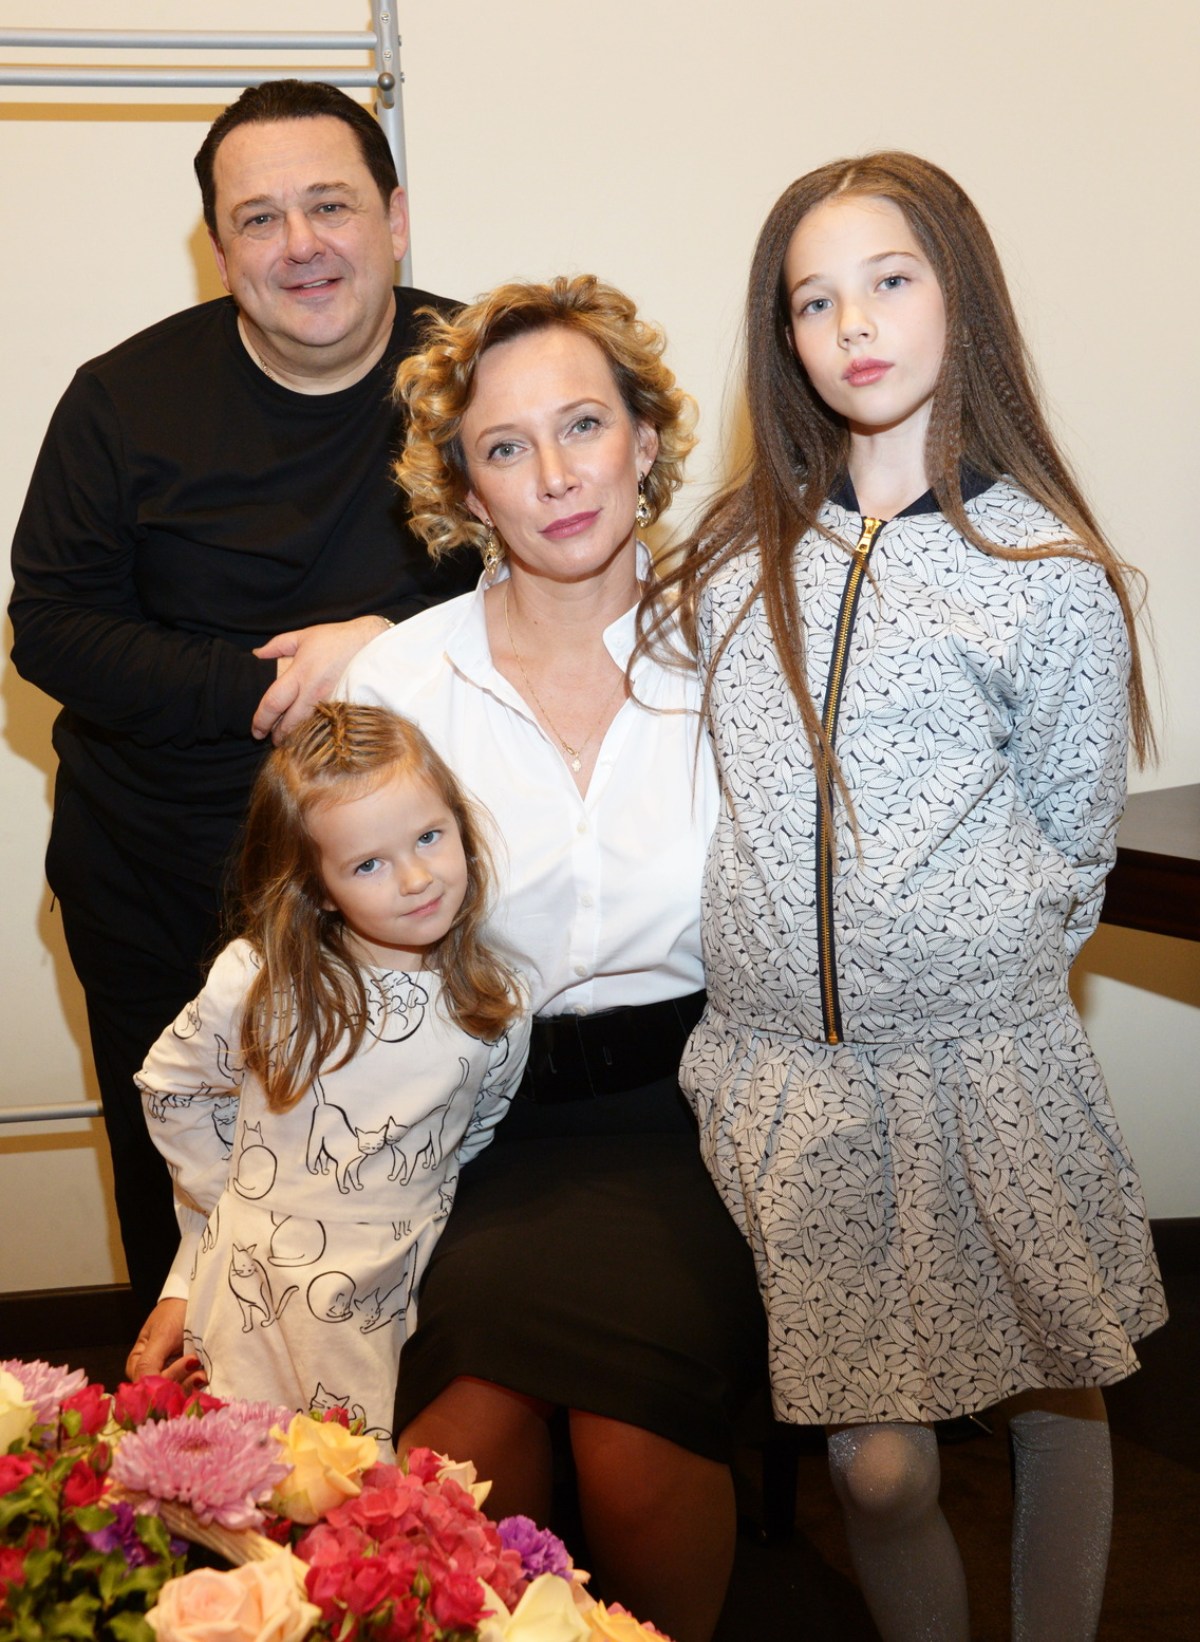 Igor Sarukhanov, sa belle épouse Tatiana et ses deux filles.